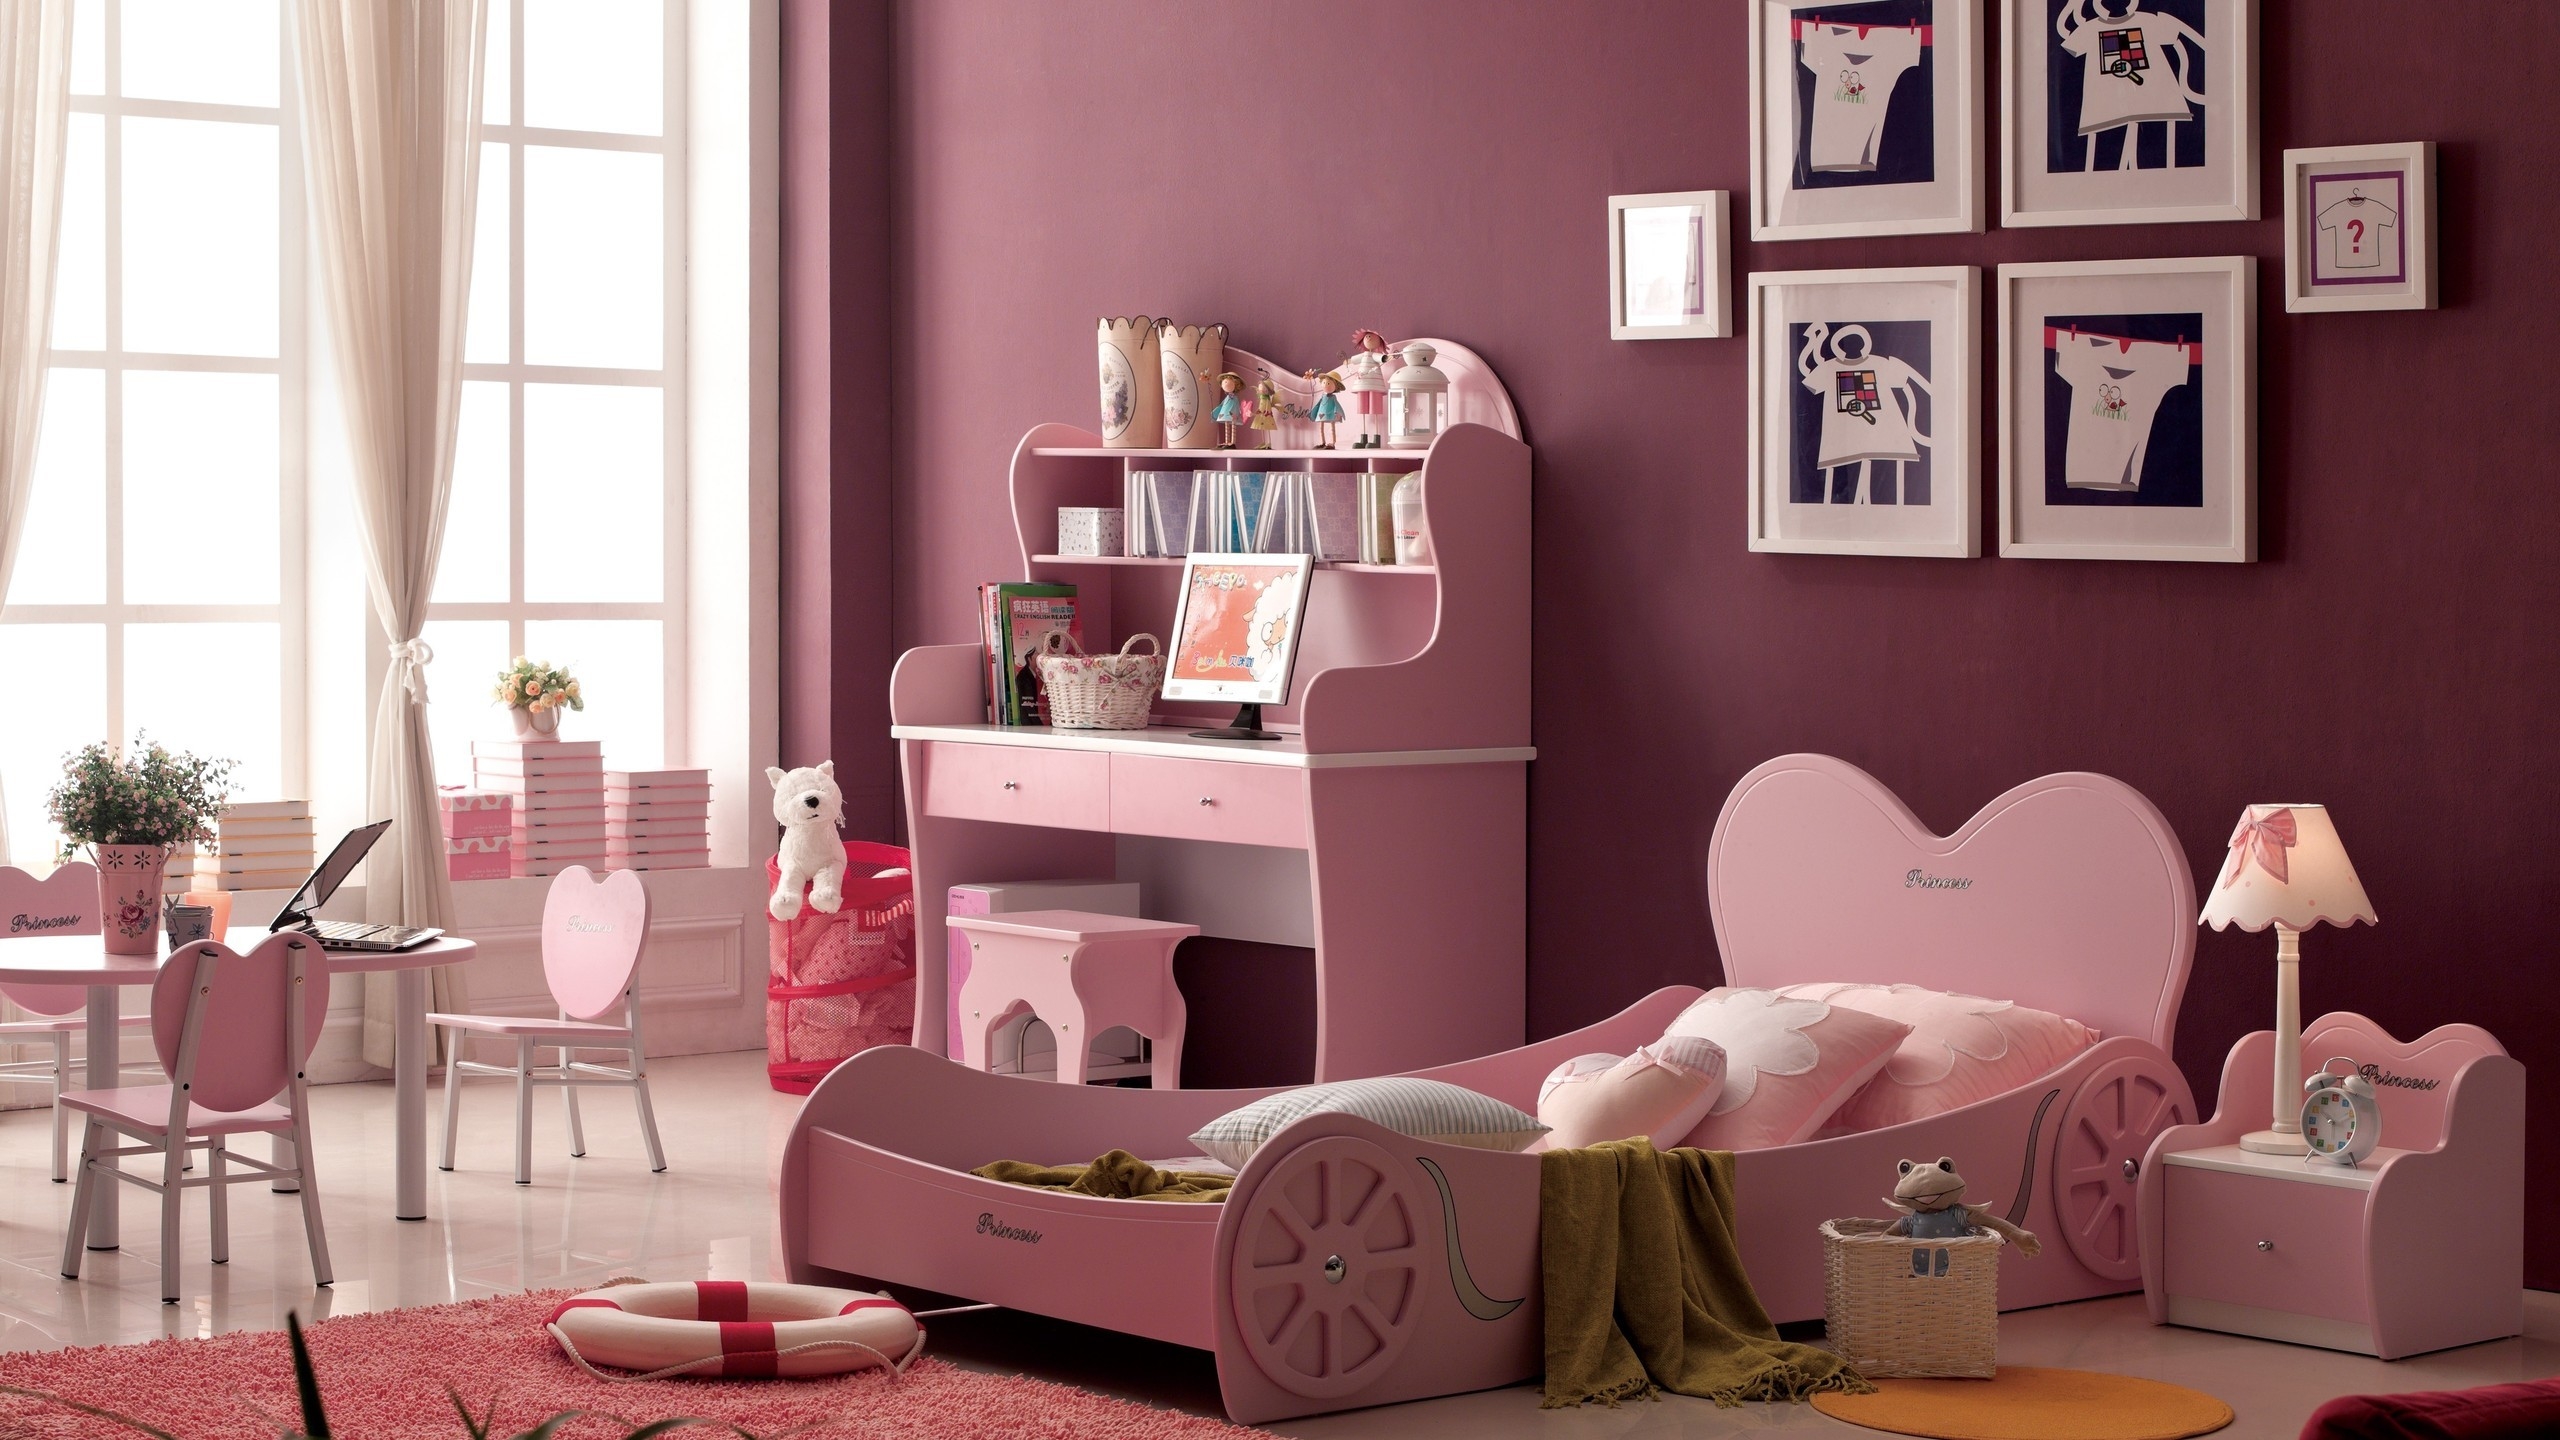 Princess Furniture for 2560x1440 HDTV resolution